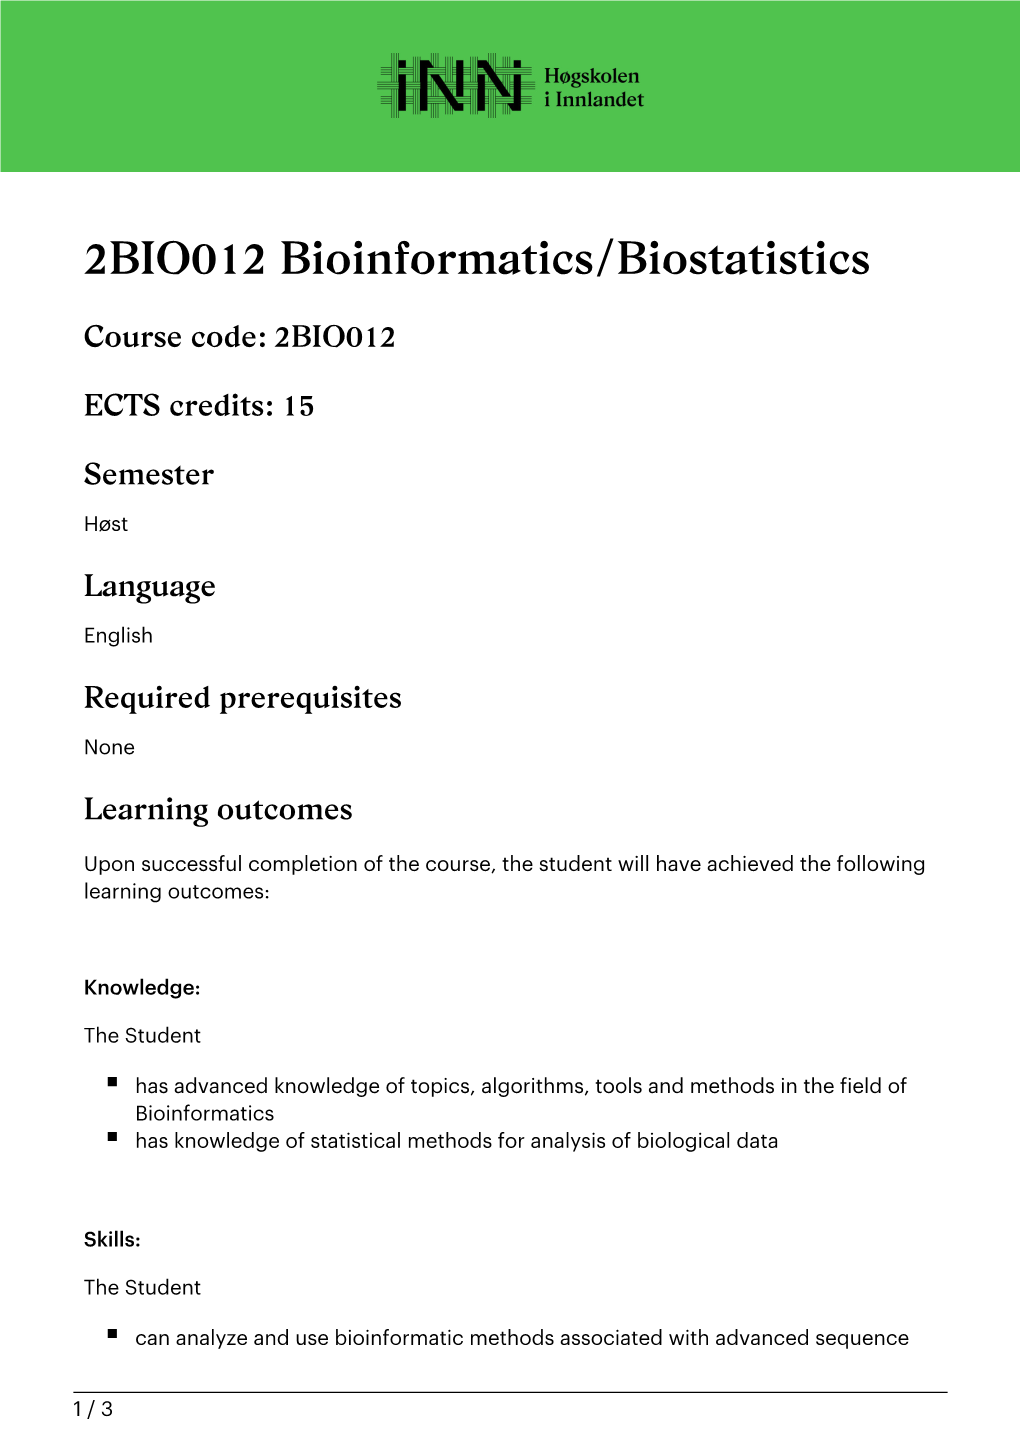 2BIO012 Bioinformatics/Biostatistics